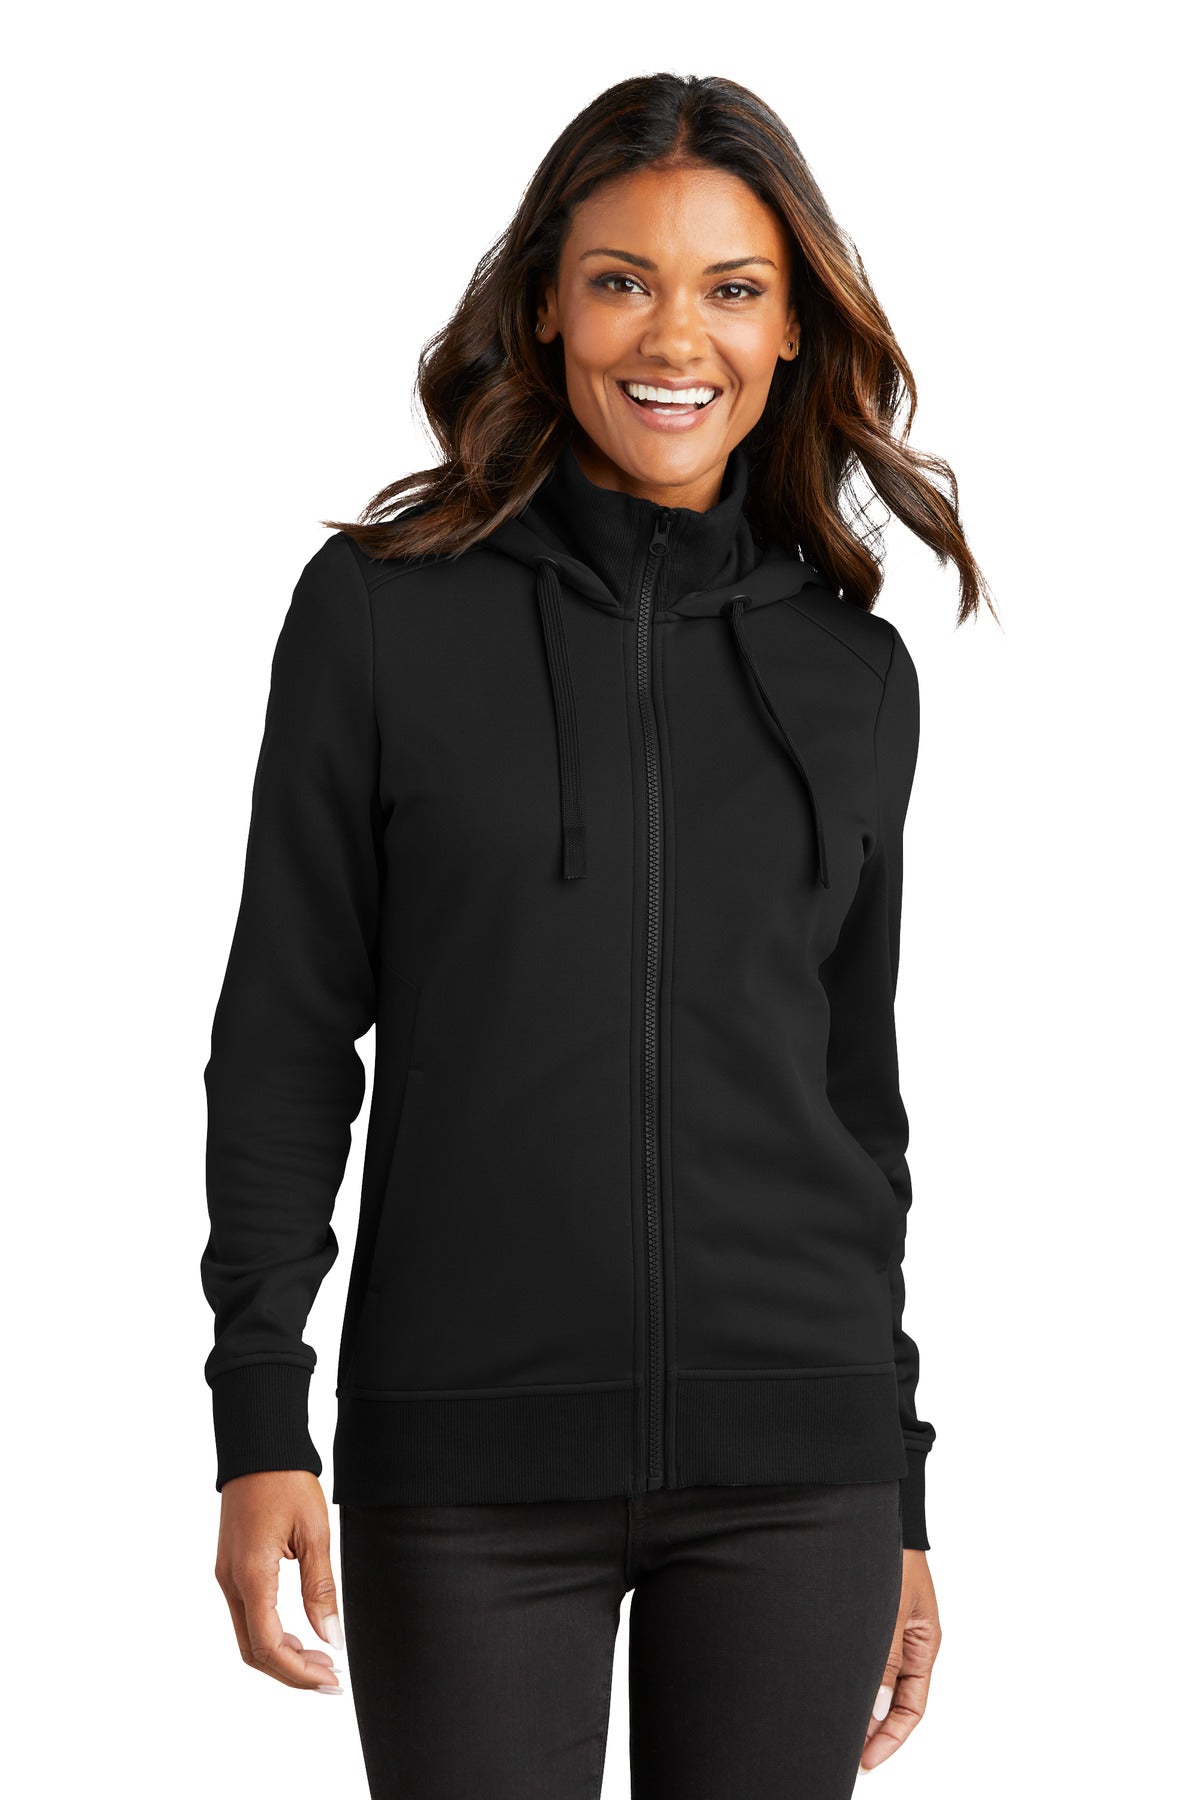 Port Authority® Ladies Smooth Fleece Hooded Jacket L814 - DFW Impression